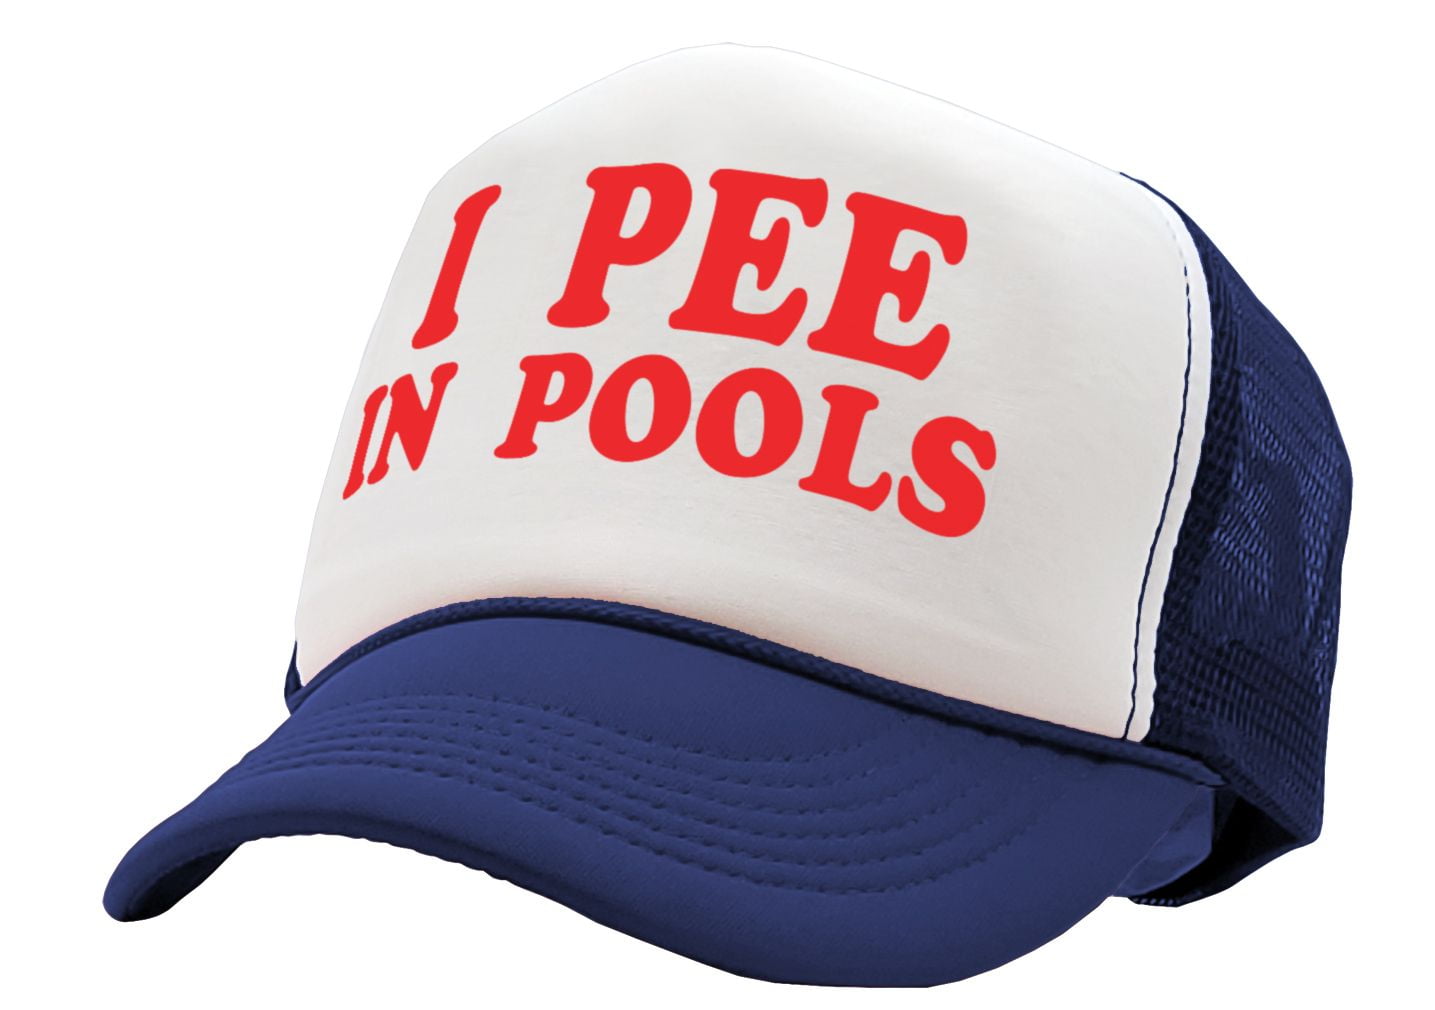 I PEE IN POOLS - funny dare gag gift joke - Vintage Retro Style Trucker Cap  Hat (Navy) 